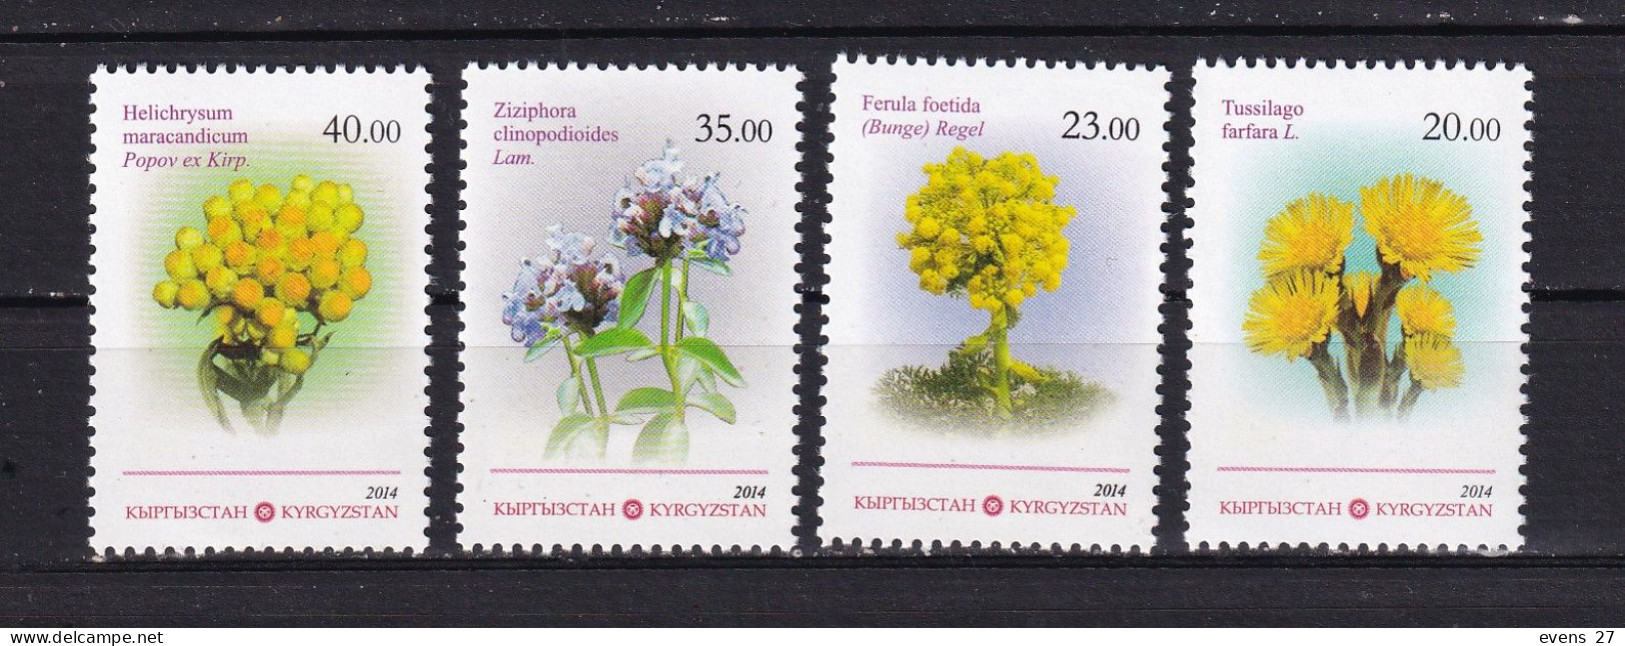 KYRGYZSTAN-2014- MEDICINAL PLANTS-MNH - Medicinal Plants